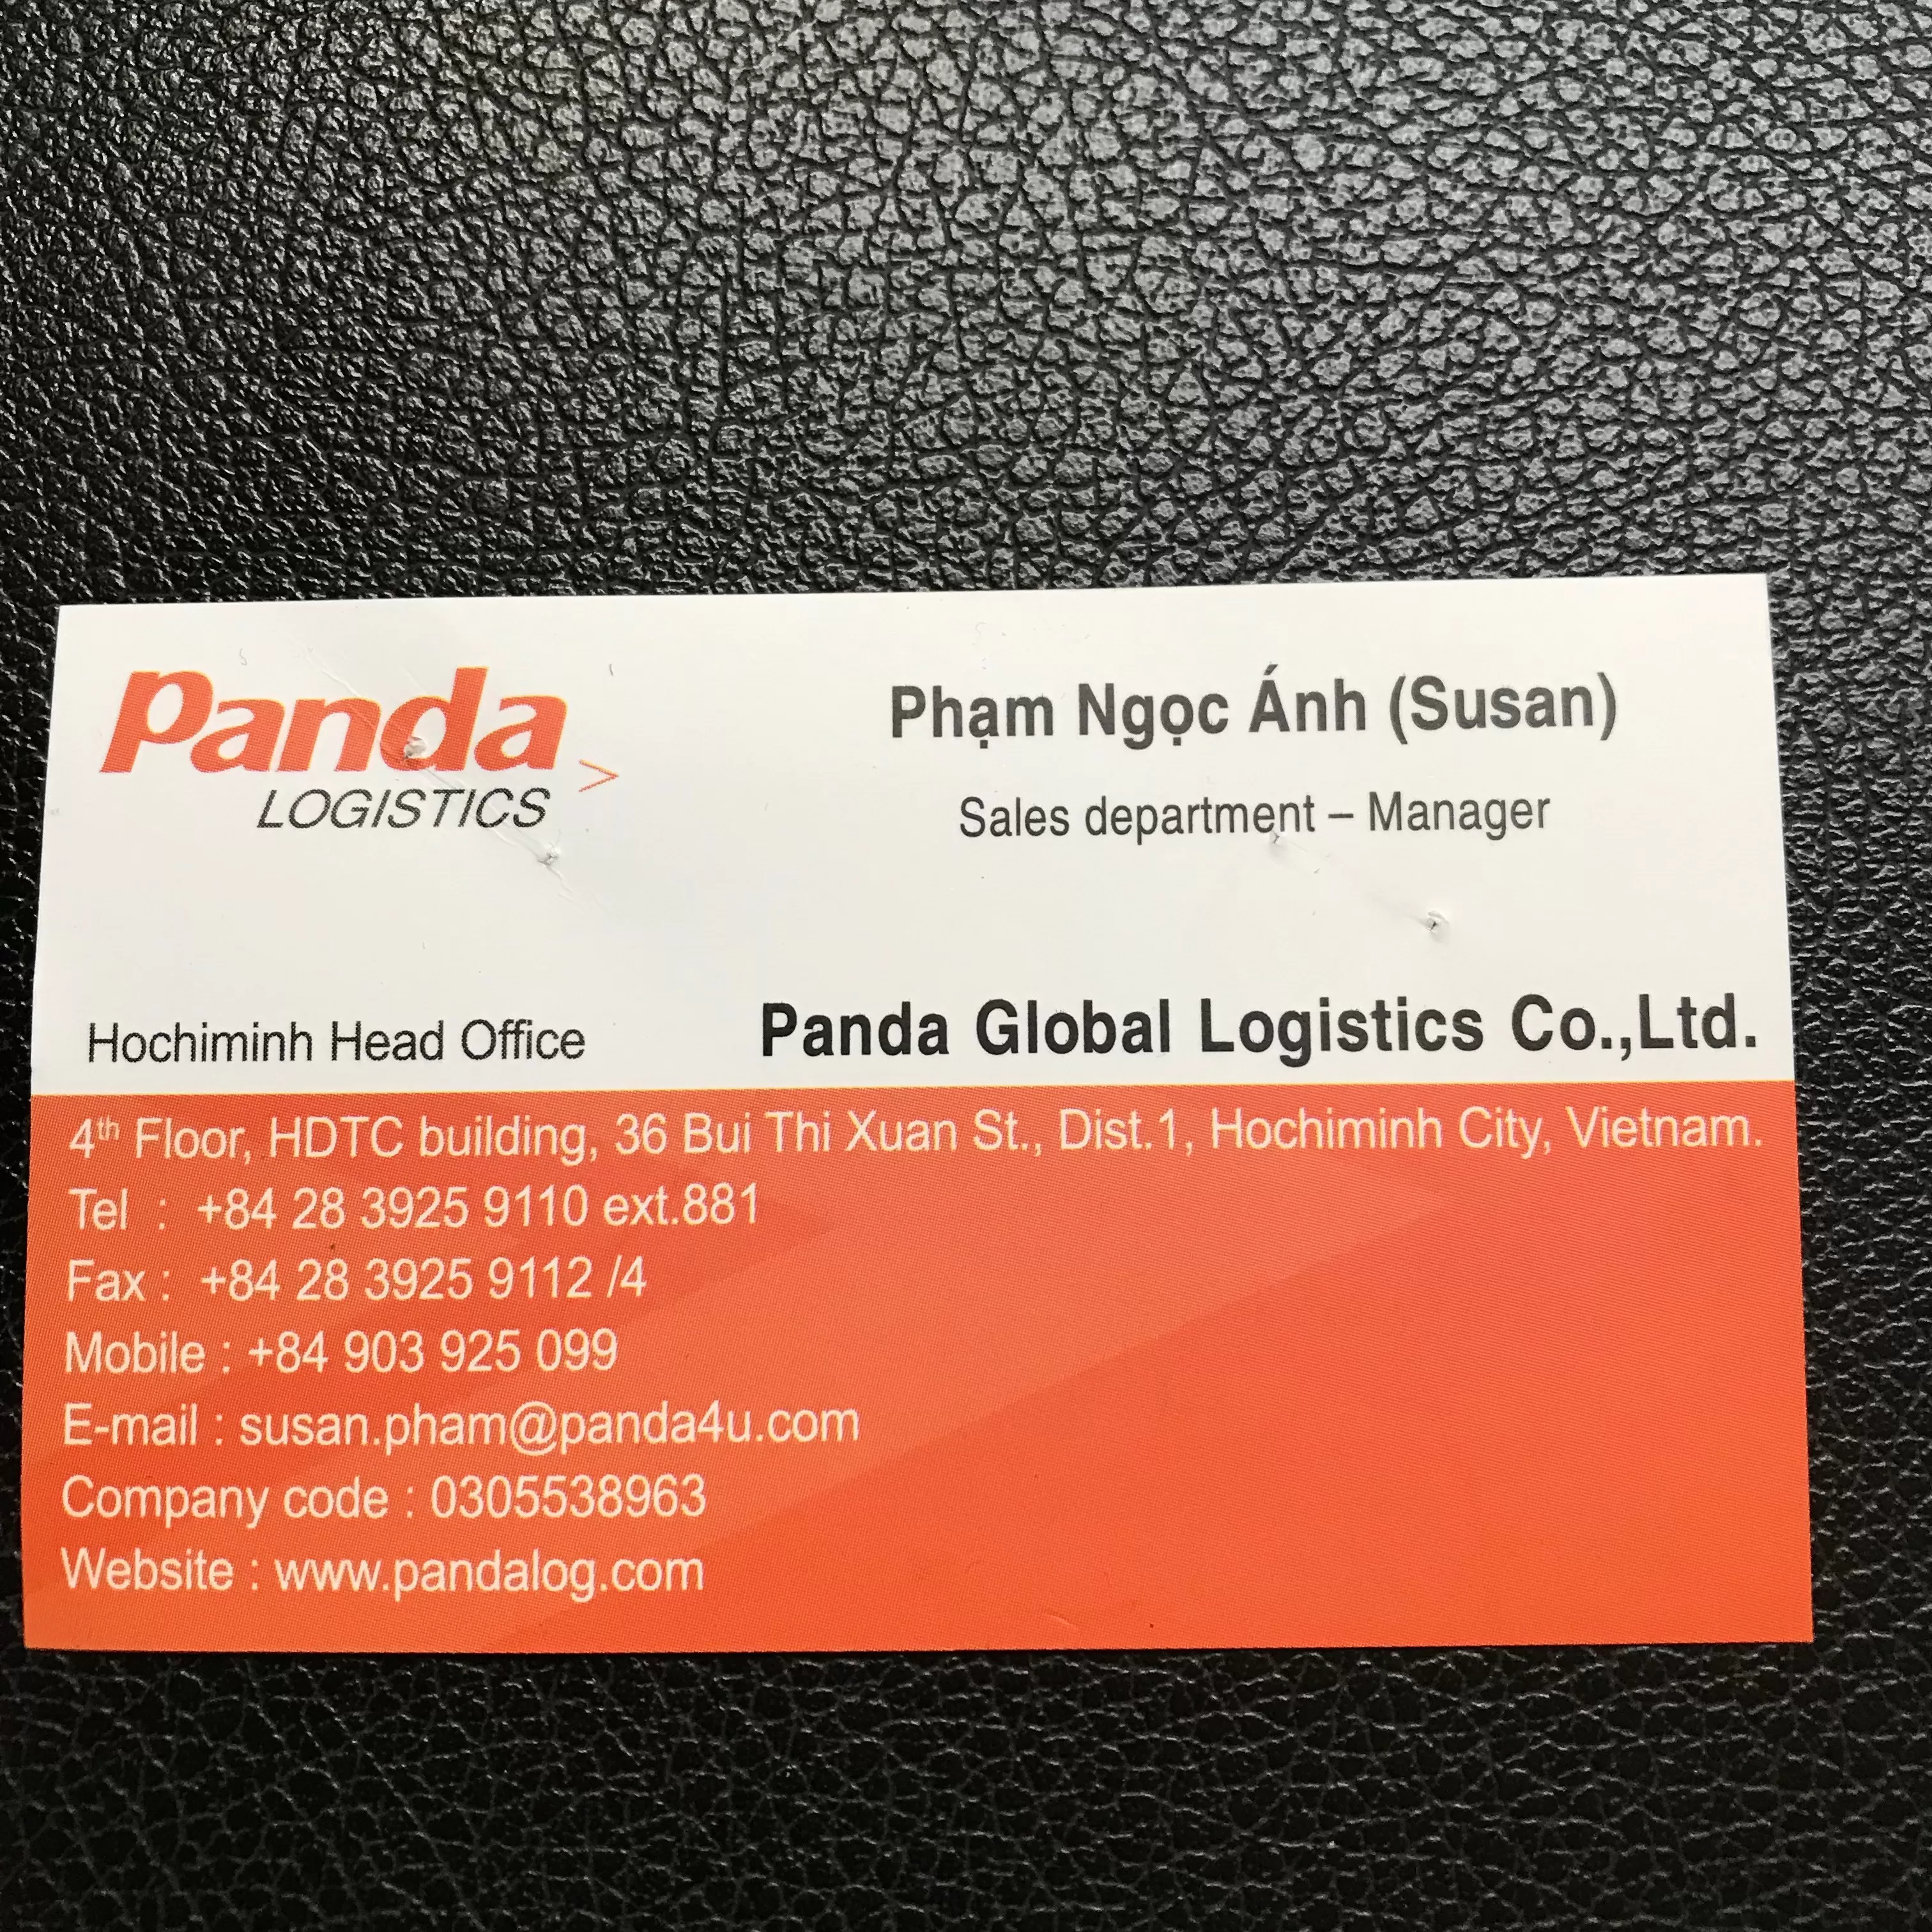 Panda Global Logistics